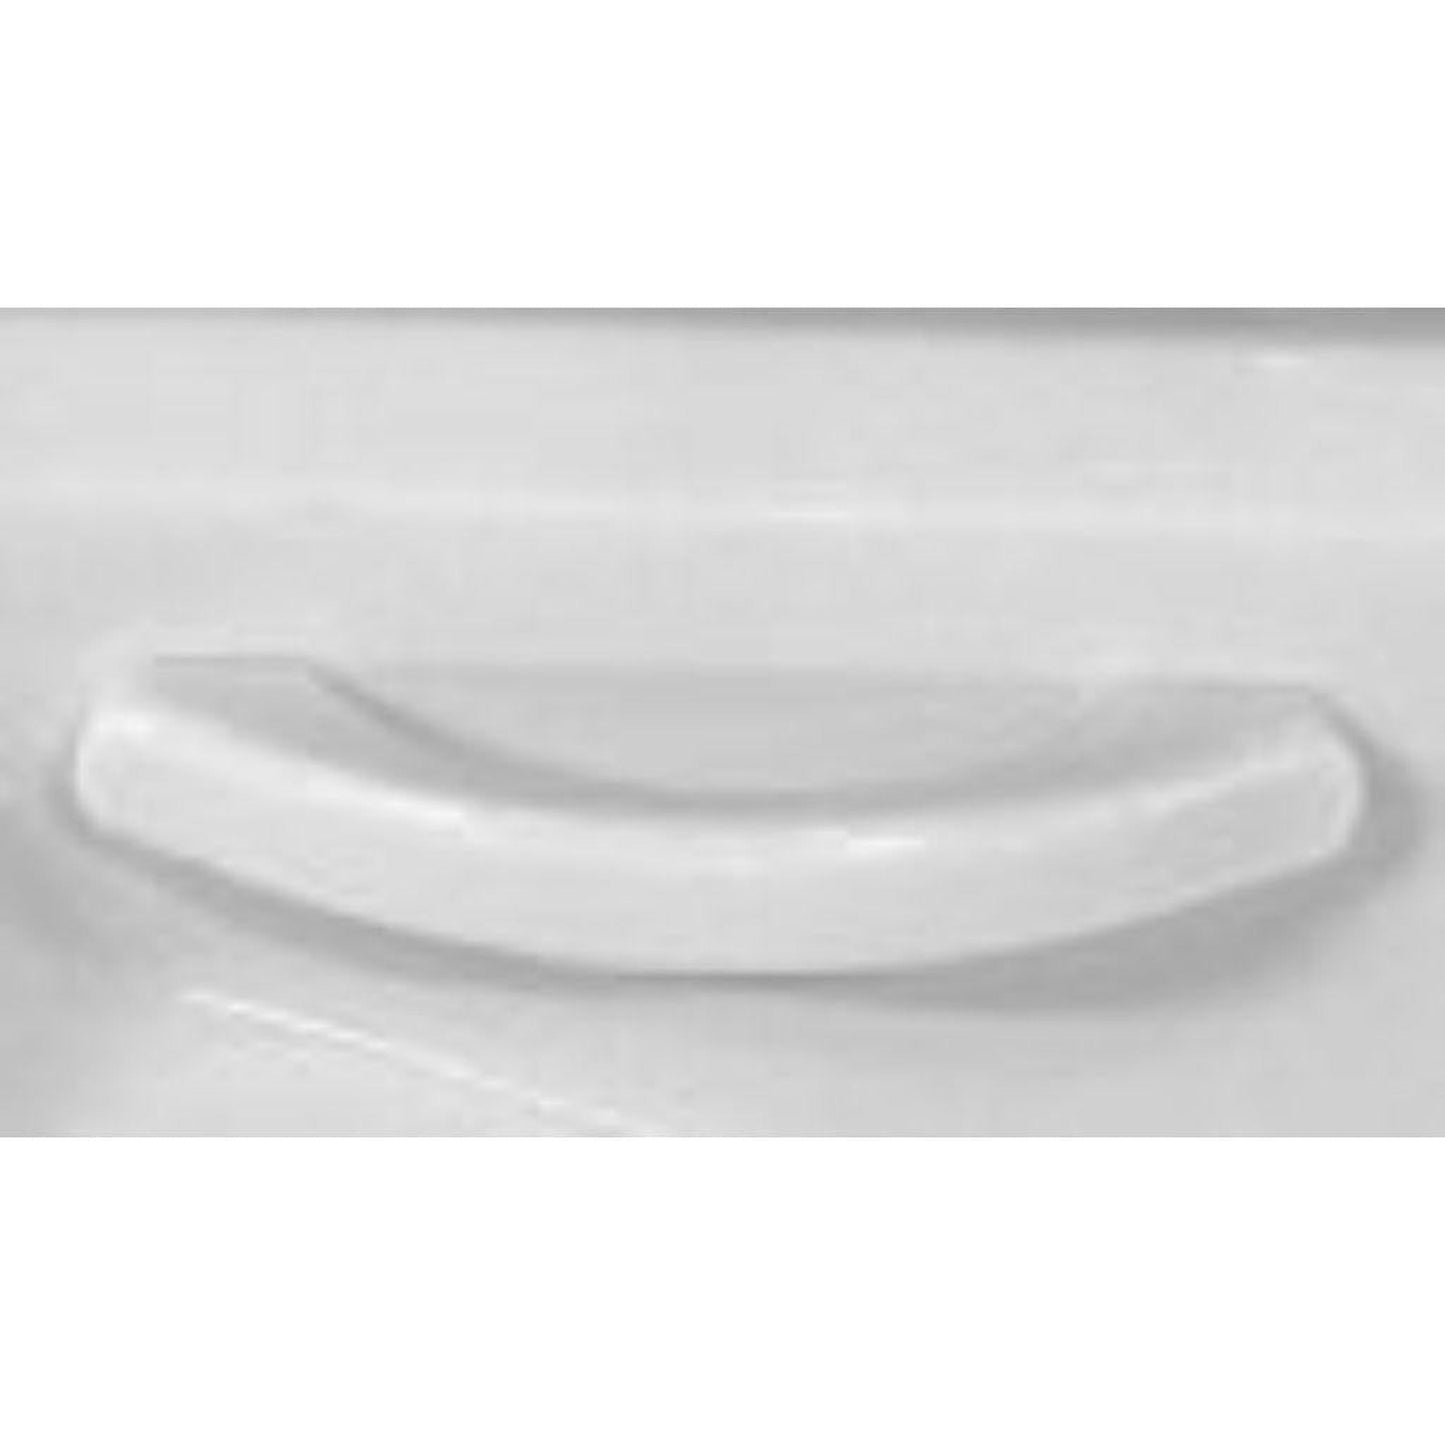 American Acrylic 67.75" x 29.125" White Slipper Style Freestanding Soaking Bathtub